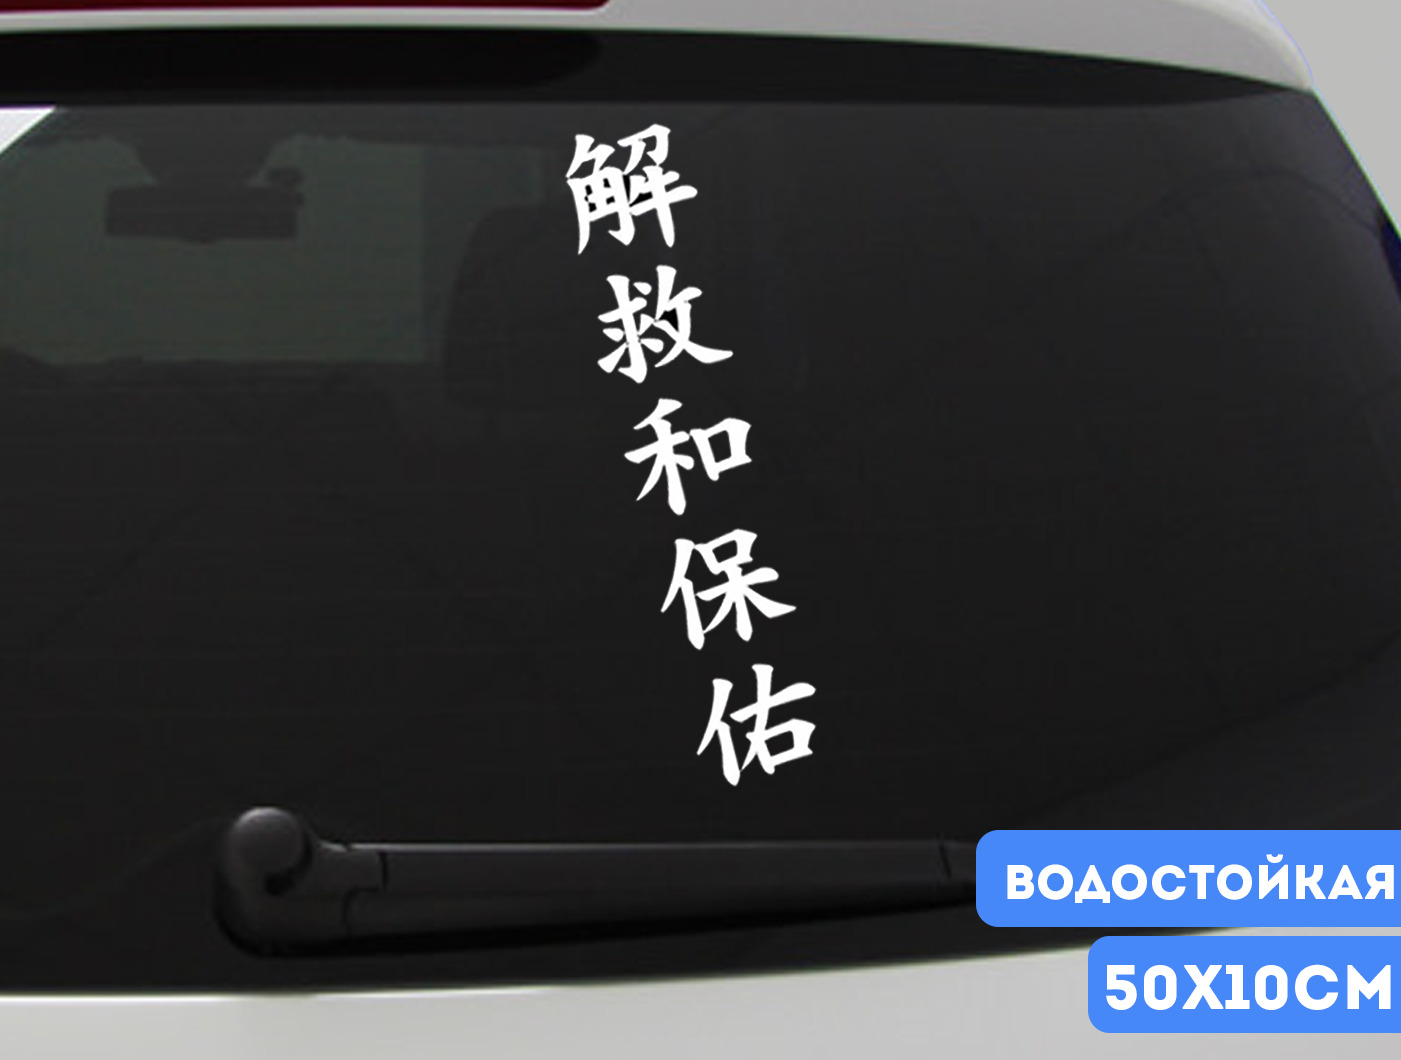 Иероглифы на машине. Иероглифы наклейки на авто. Наклейки на авто иероглифы японские. Японские иероглифы наклейки на автомобиль. Китайский иероглиф автомобиль.